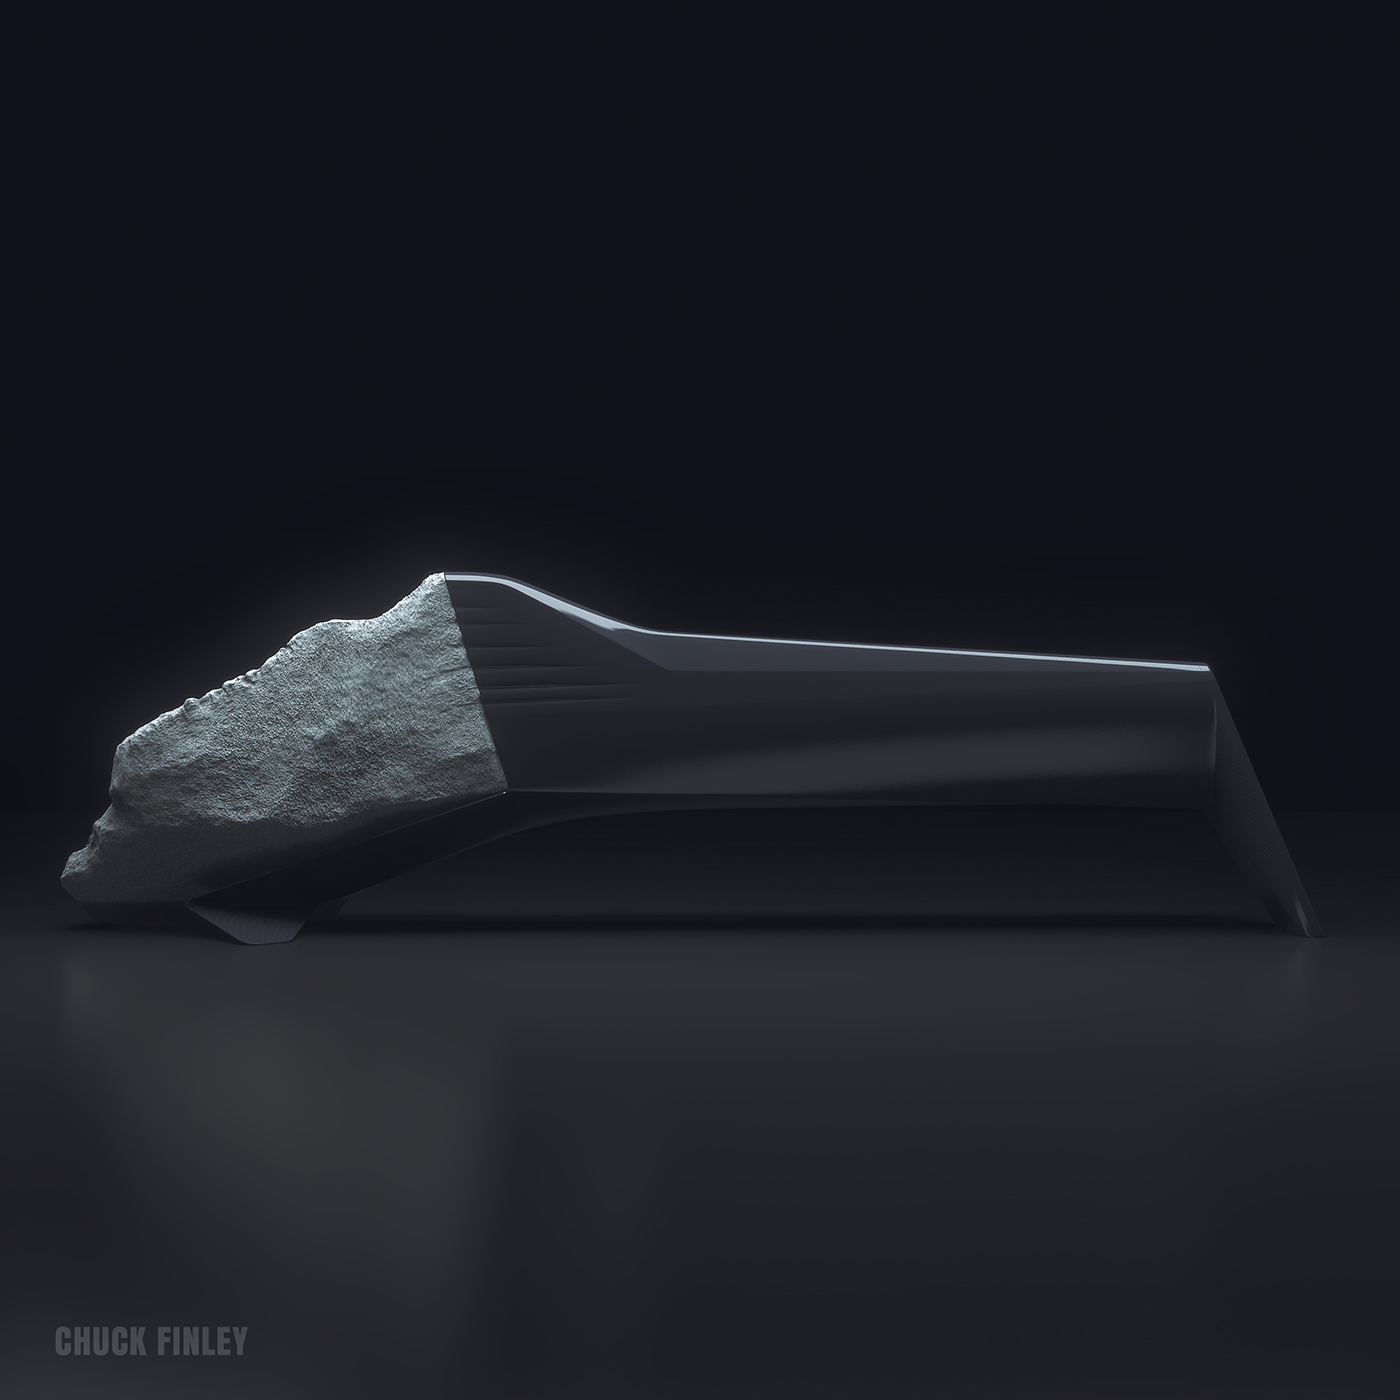 PEUGEOT Carbon Fiber volcanic rock onyx sofa art object industrial design 